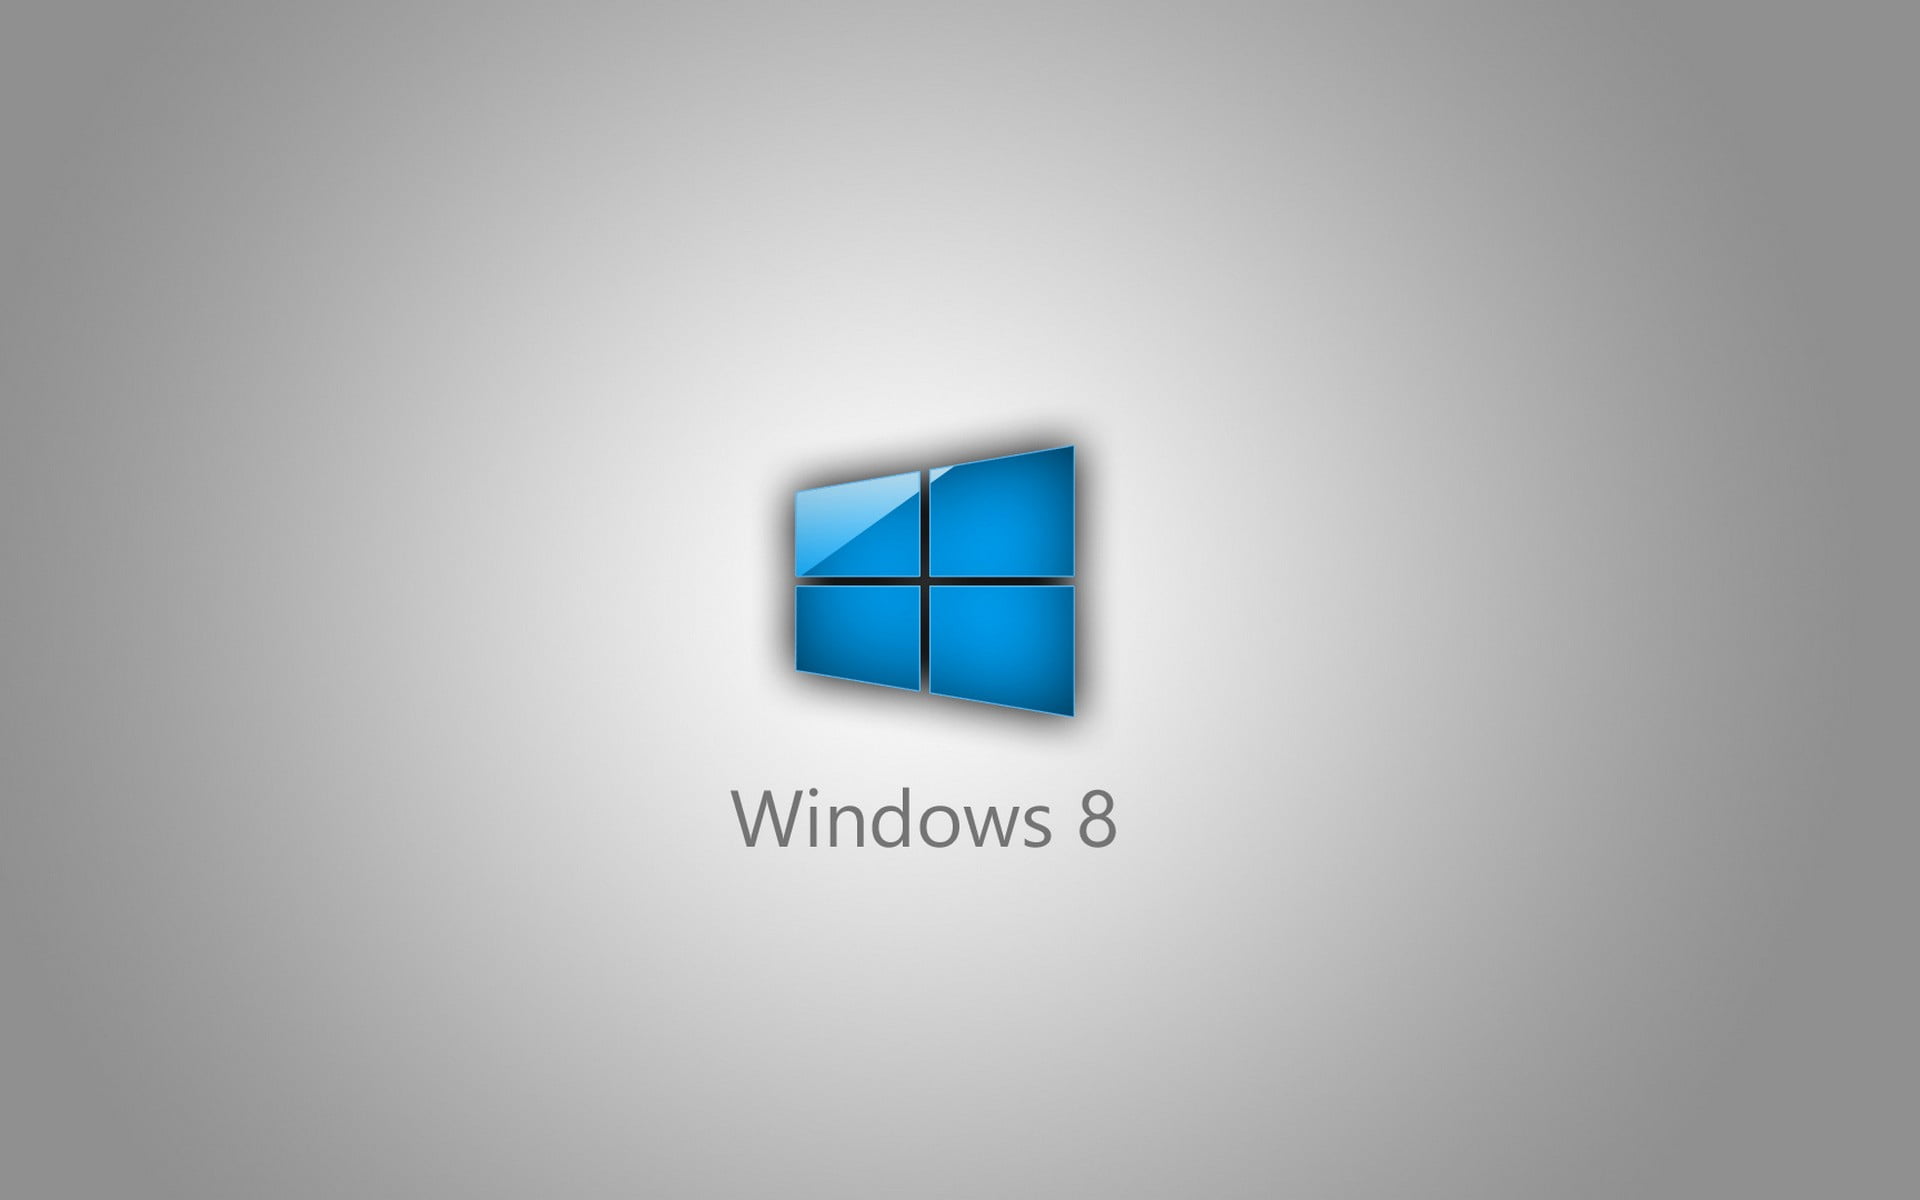 white and blue wall decor, Windows 8, Microsoft Windows, Microsoft, simple